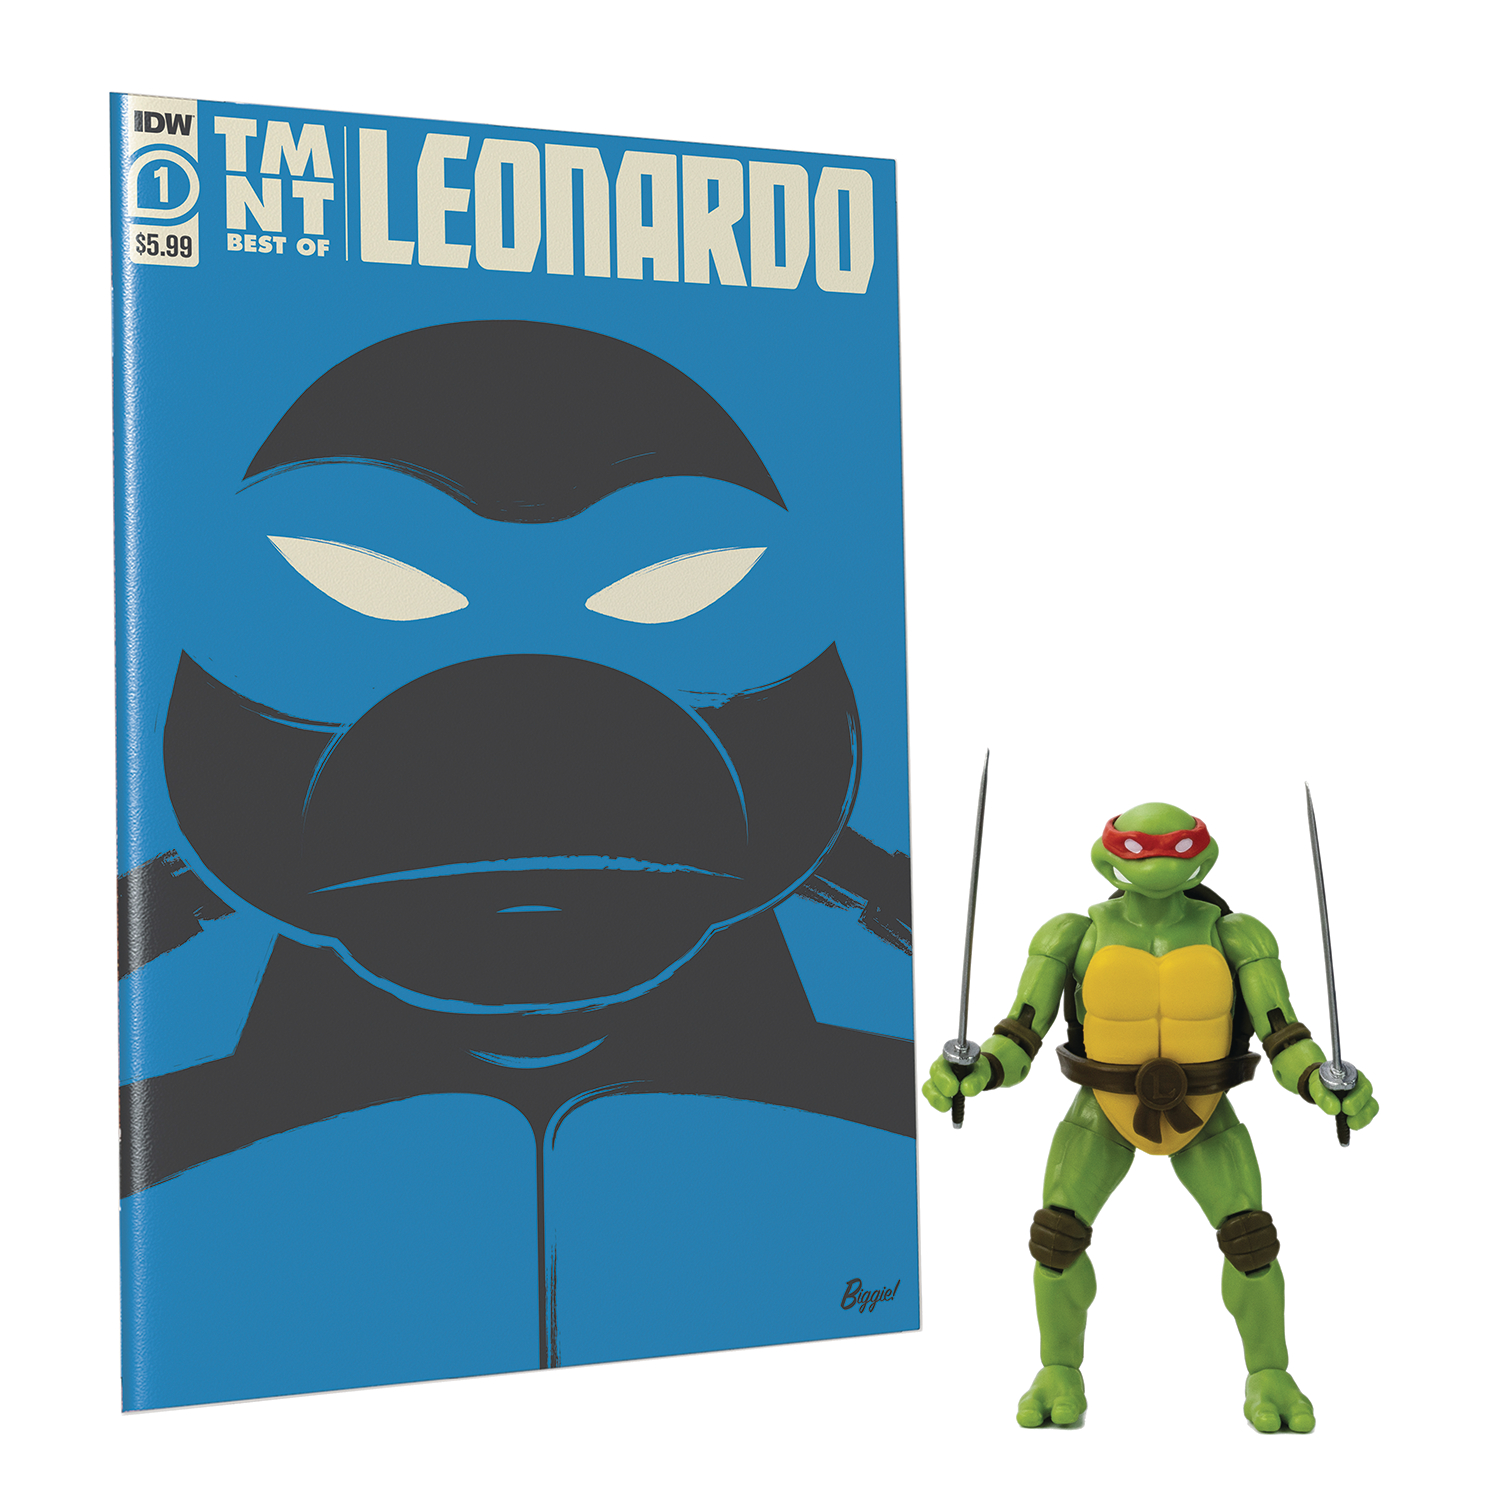 Teenage Mutant Ninja Turtles Best of Leonardo IDW Comic Book & Bst Axn 5 Inch Action Figure